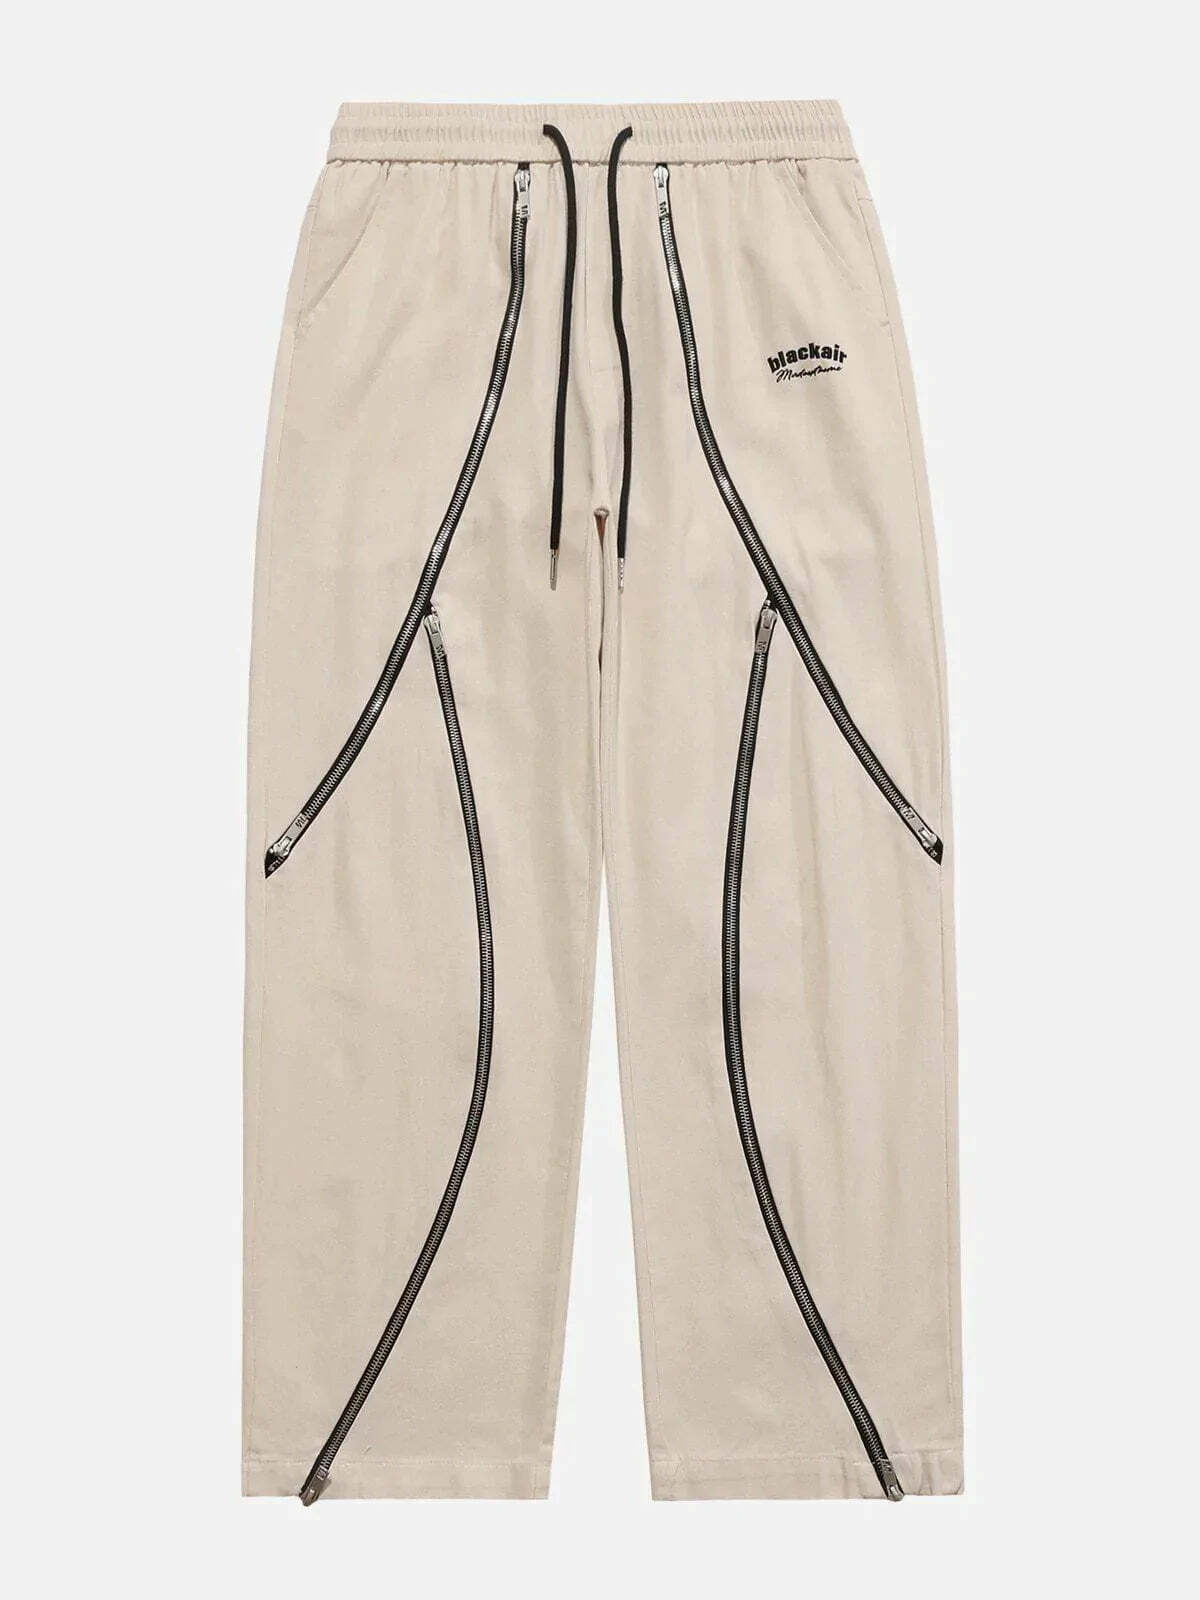 zipperembellished cargo pants edgy streetwear essential 1184